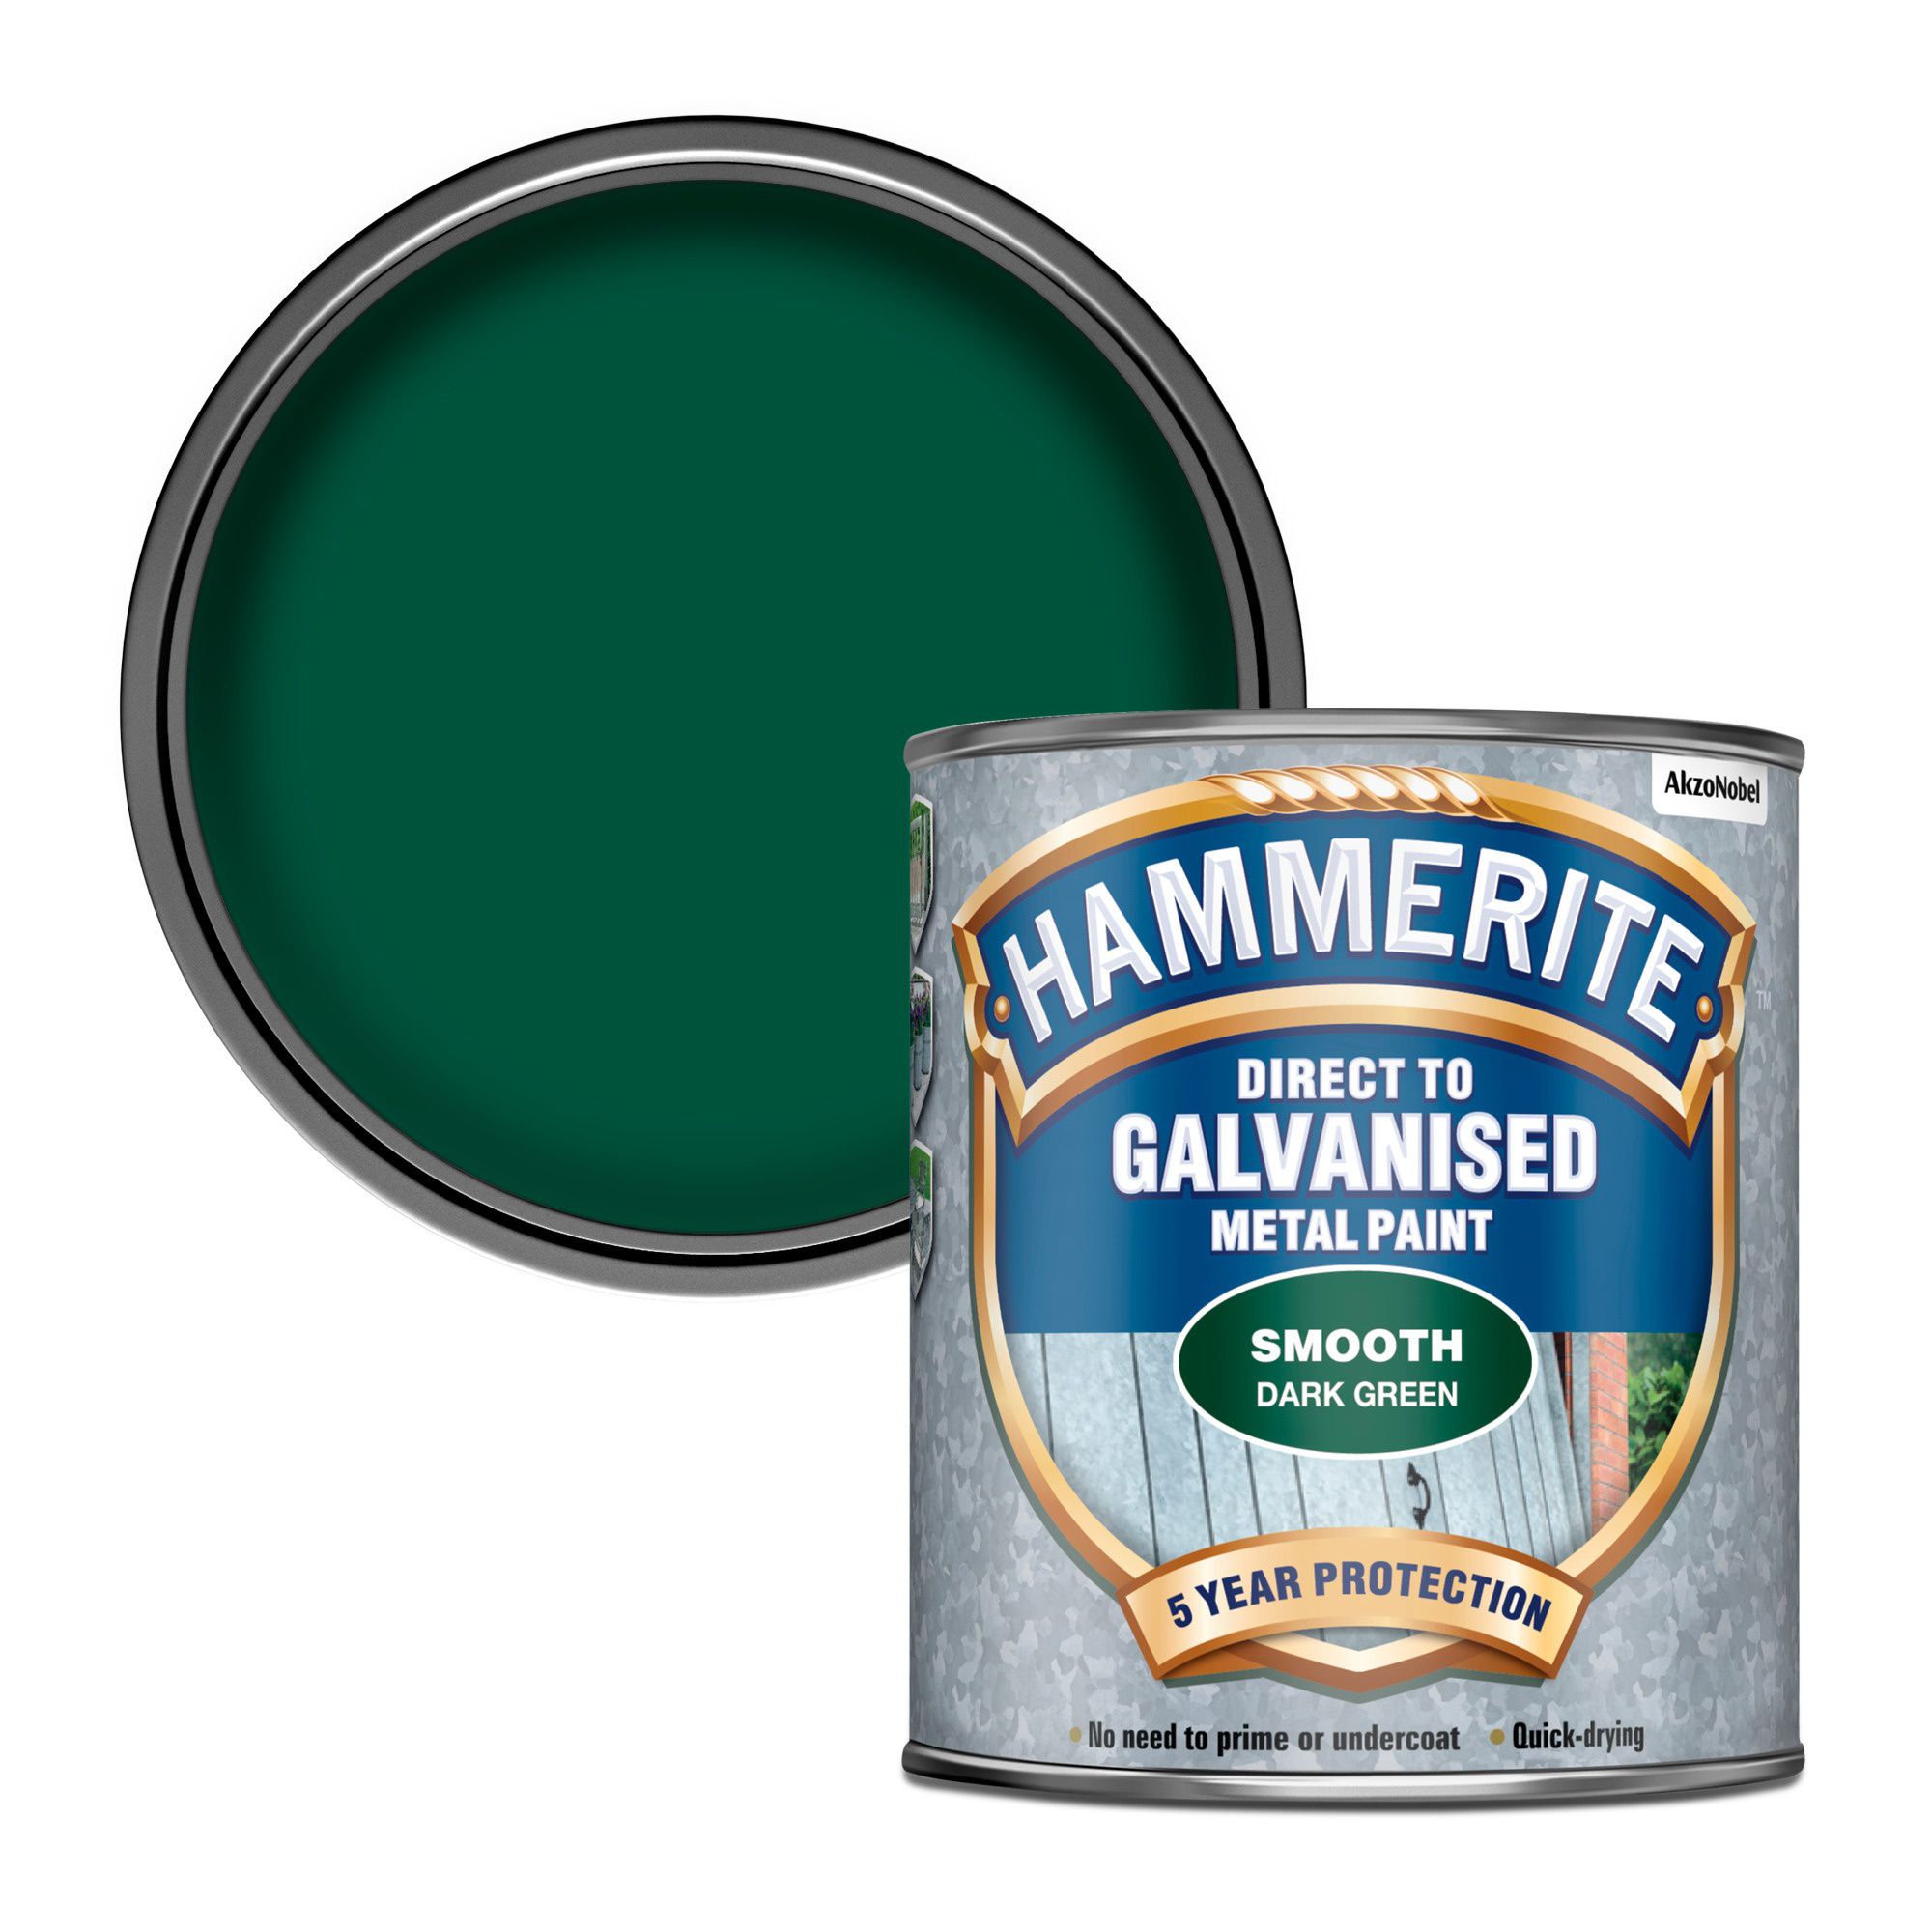 Direct to Galvanised Metal Paint– Hammerite